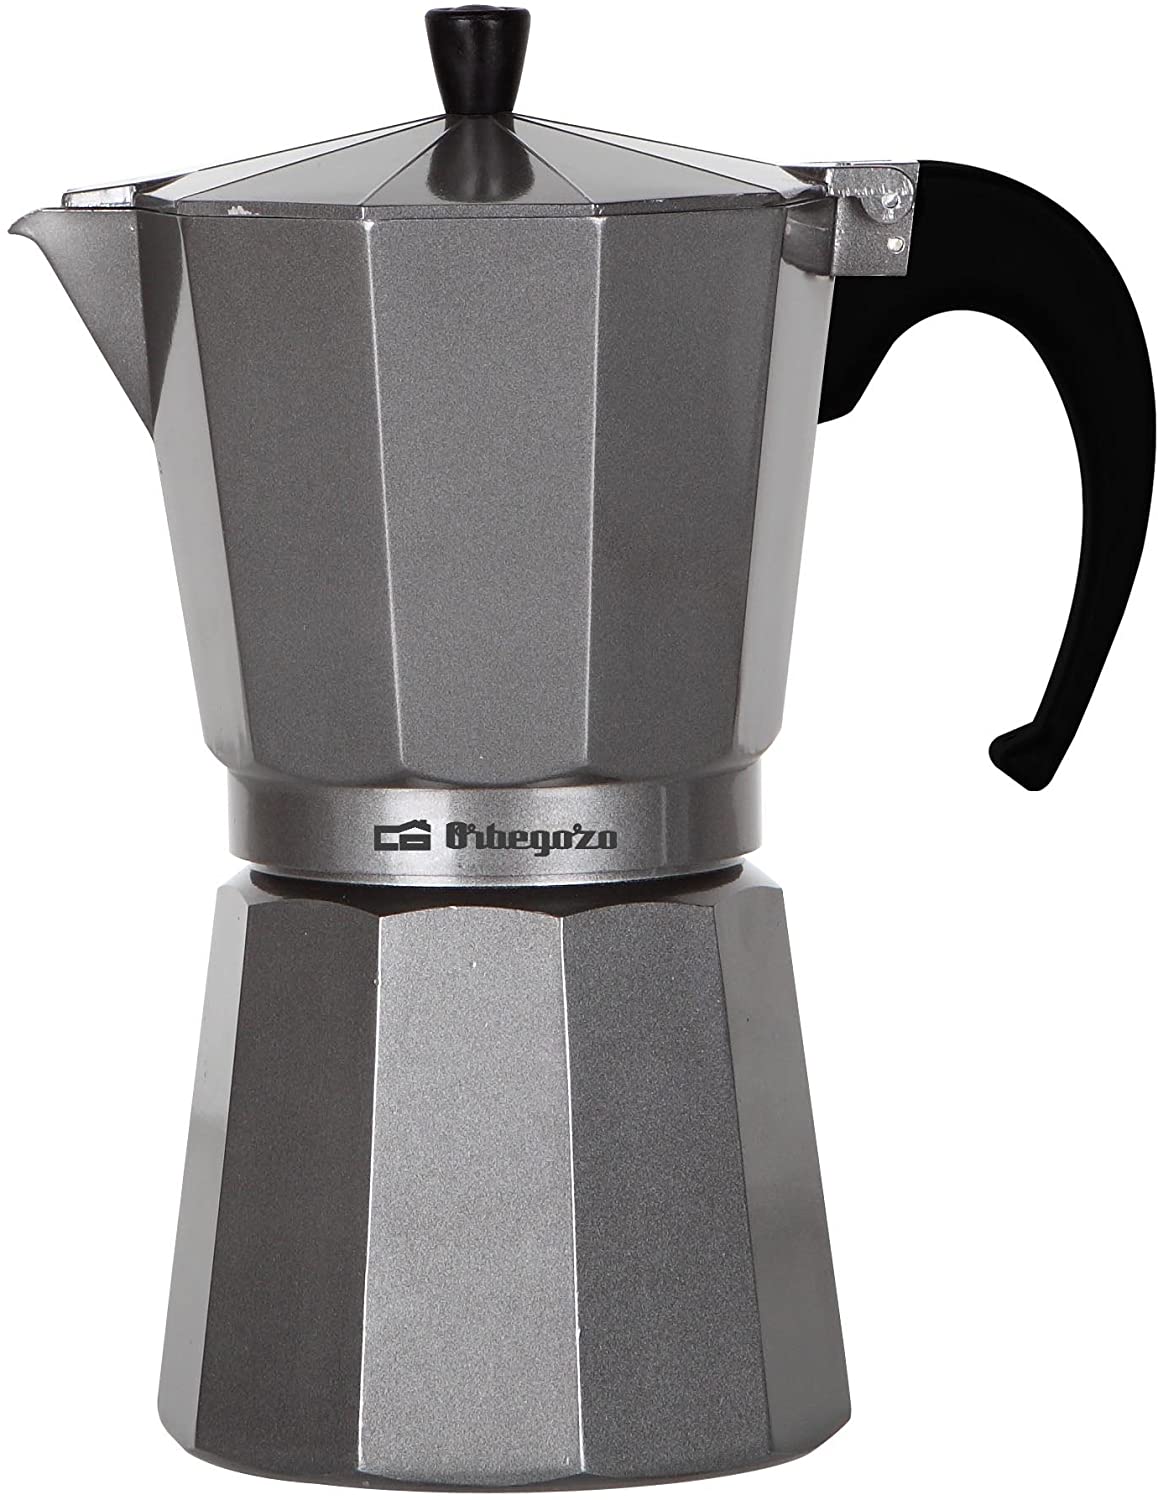 Orbegozo KFS 920 - Italian aluminum coffee maker, 9 cup capacity, silver finish